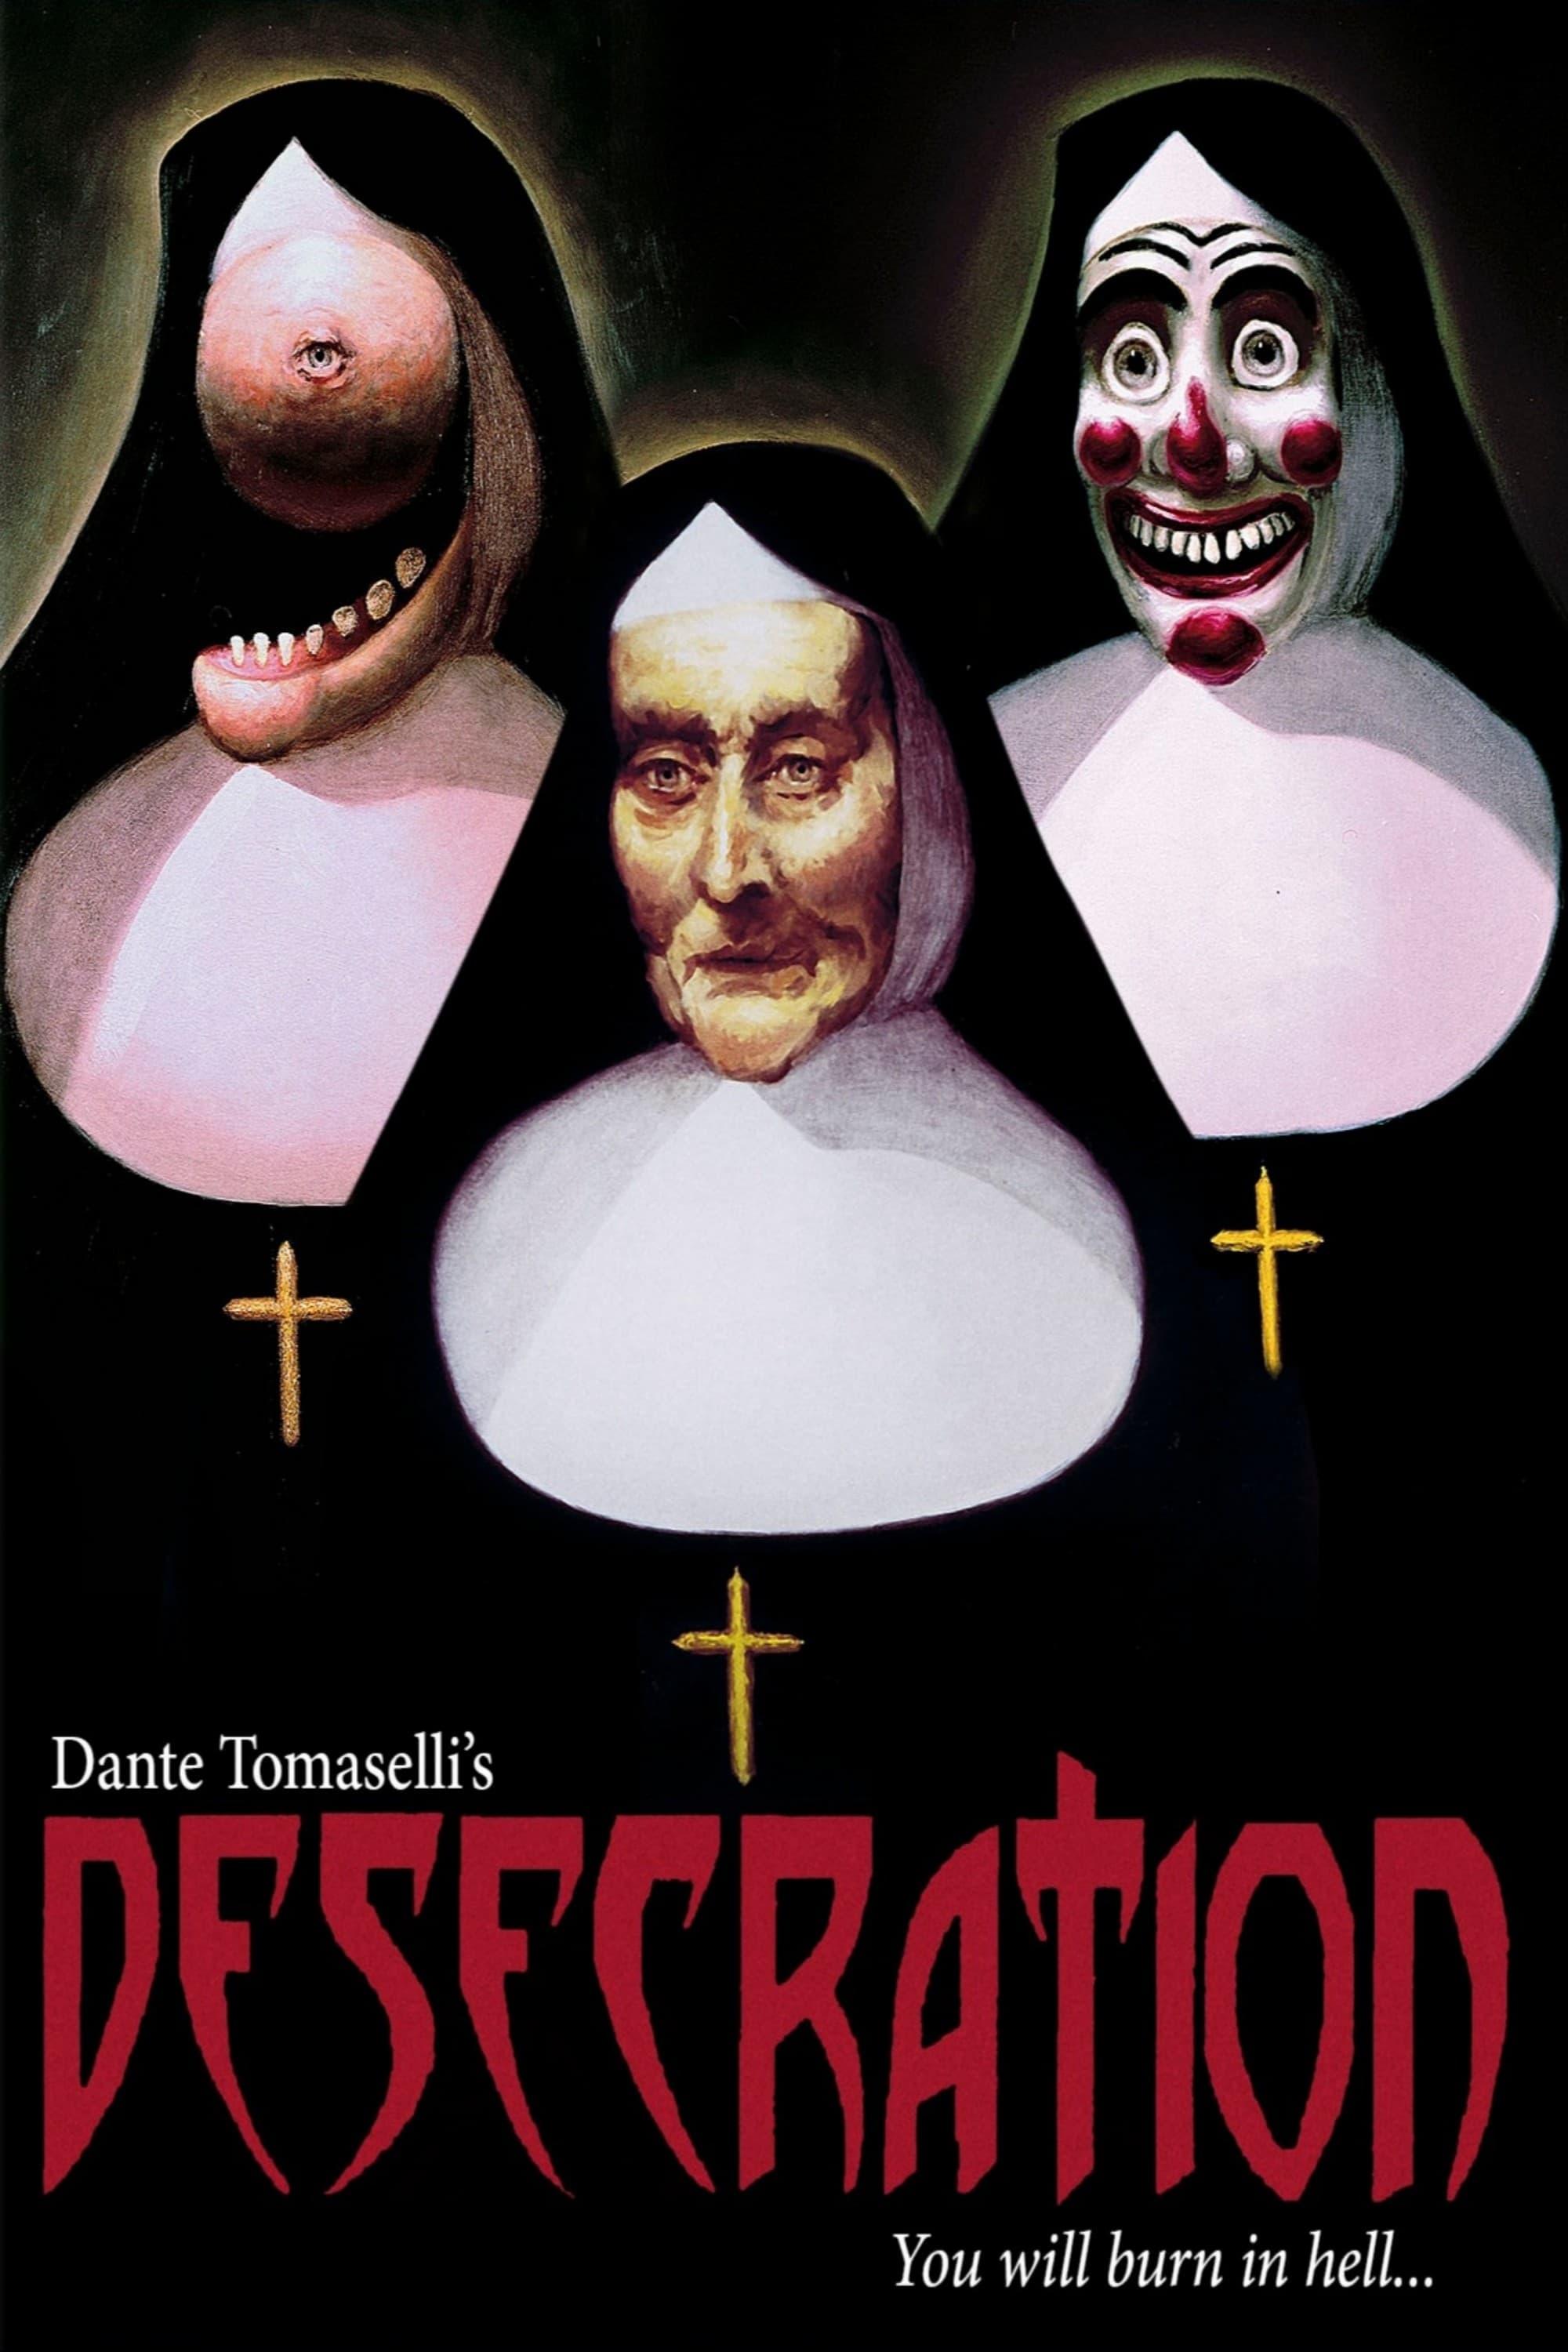 Desecration poster